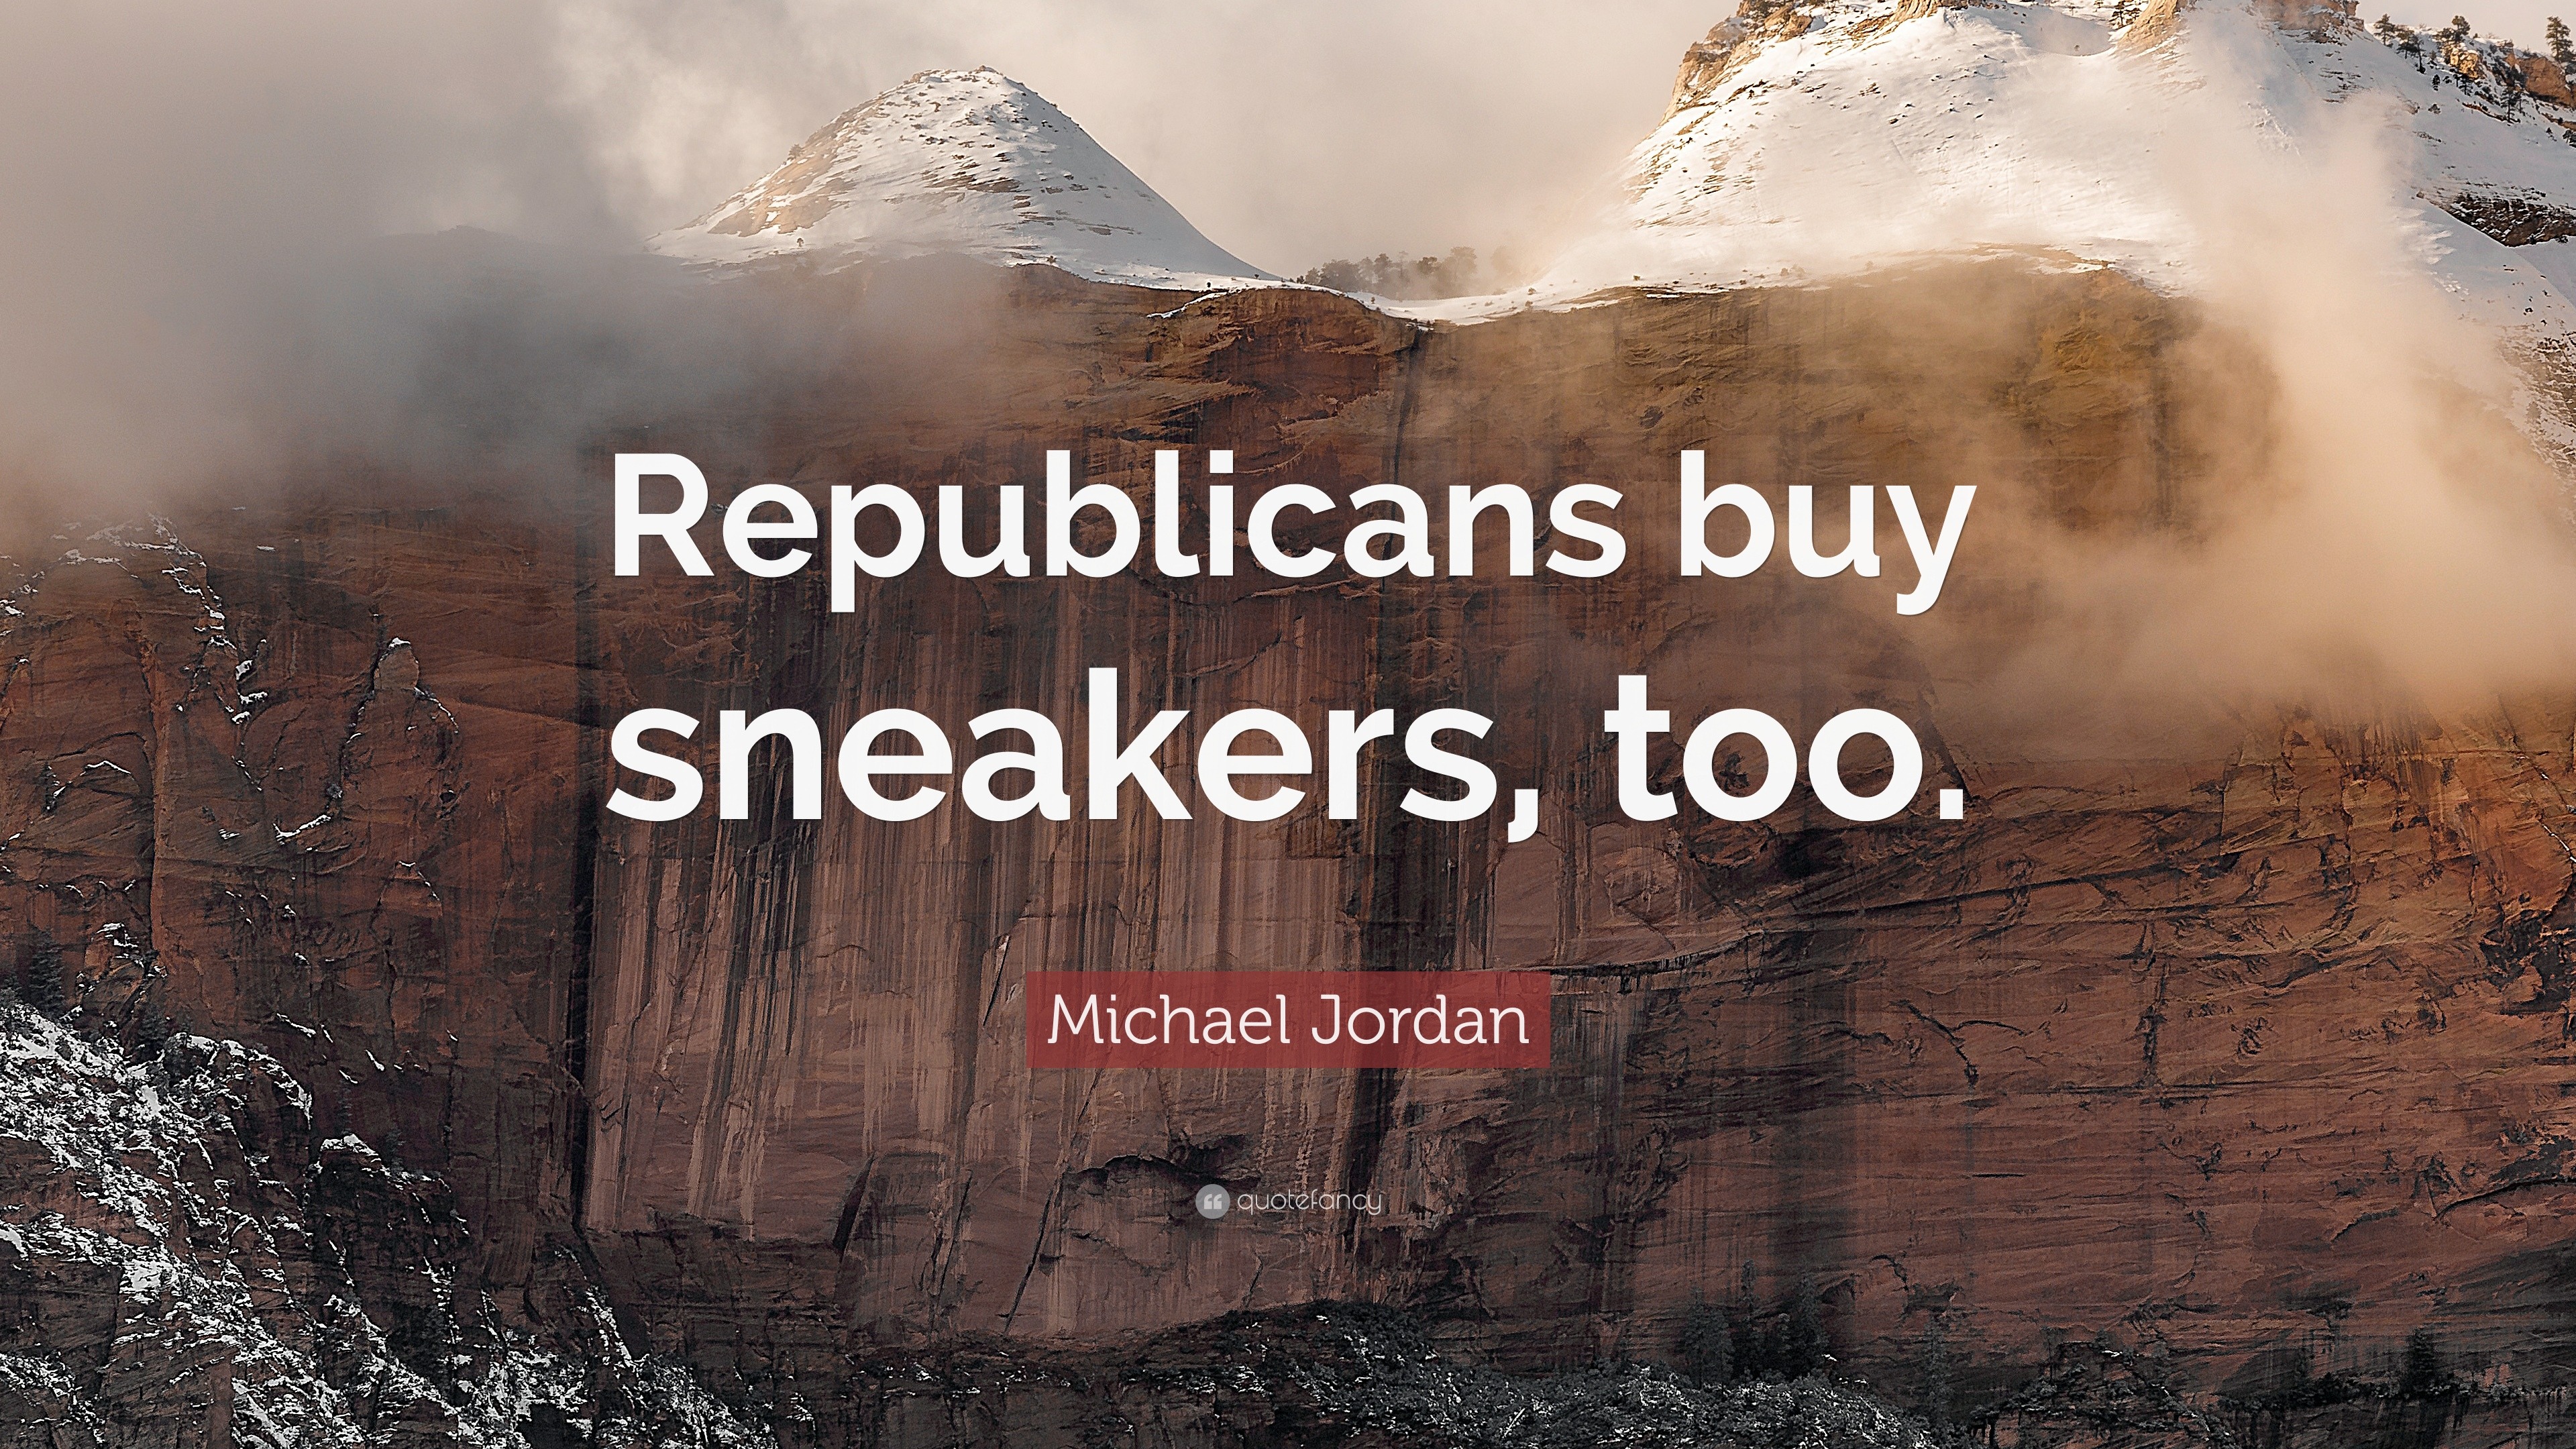 Michael Jordan Quote: “Republicans buy 